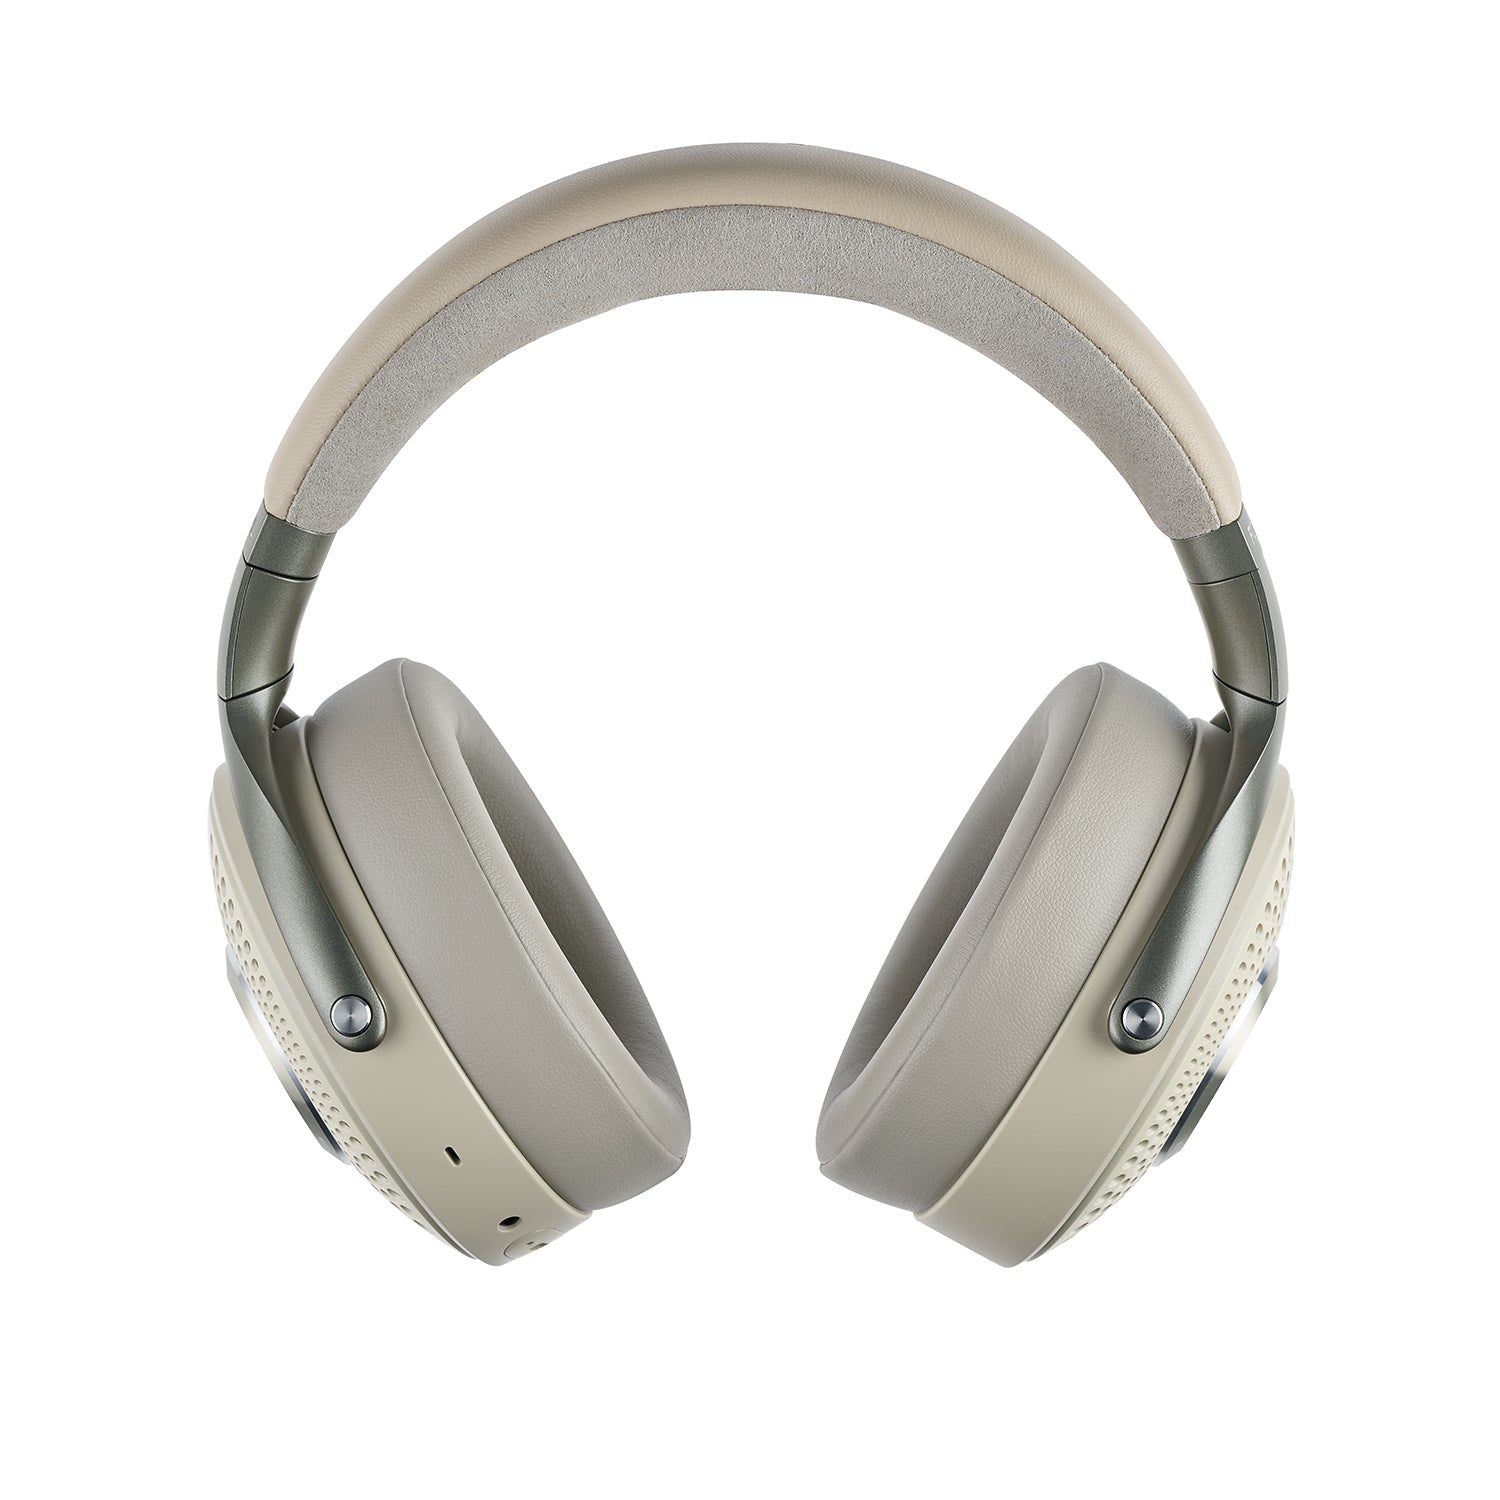 Focal Bathys Over-Ear Hi-Fi Bluetooth Wireless Headphones with Active Noise Cancellation